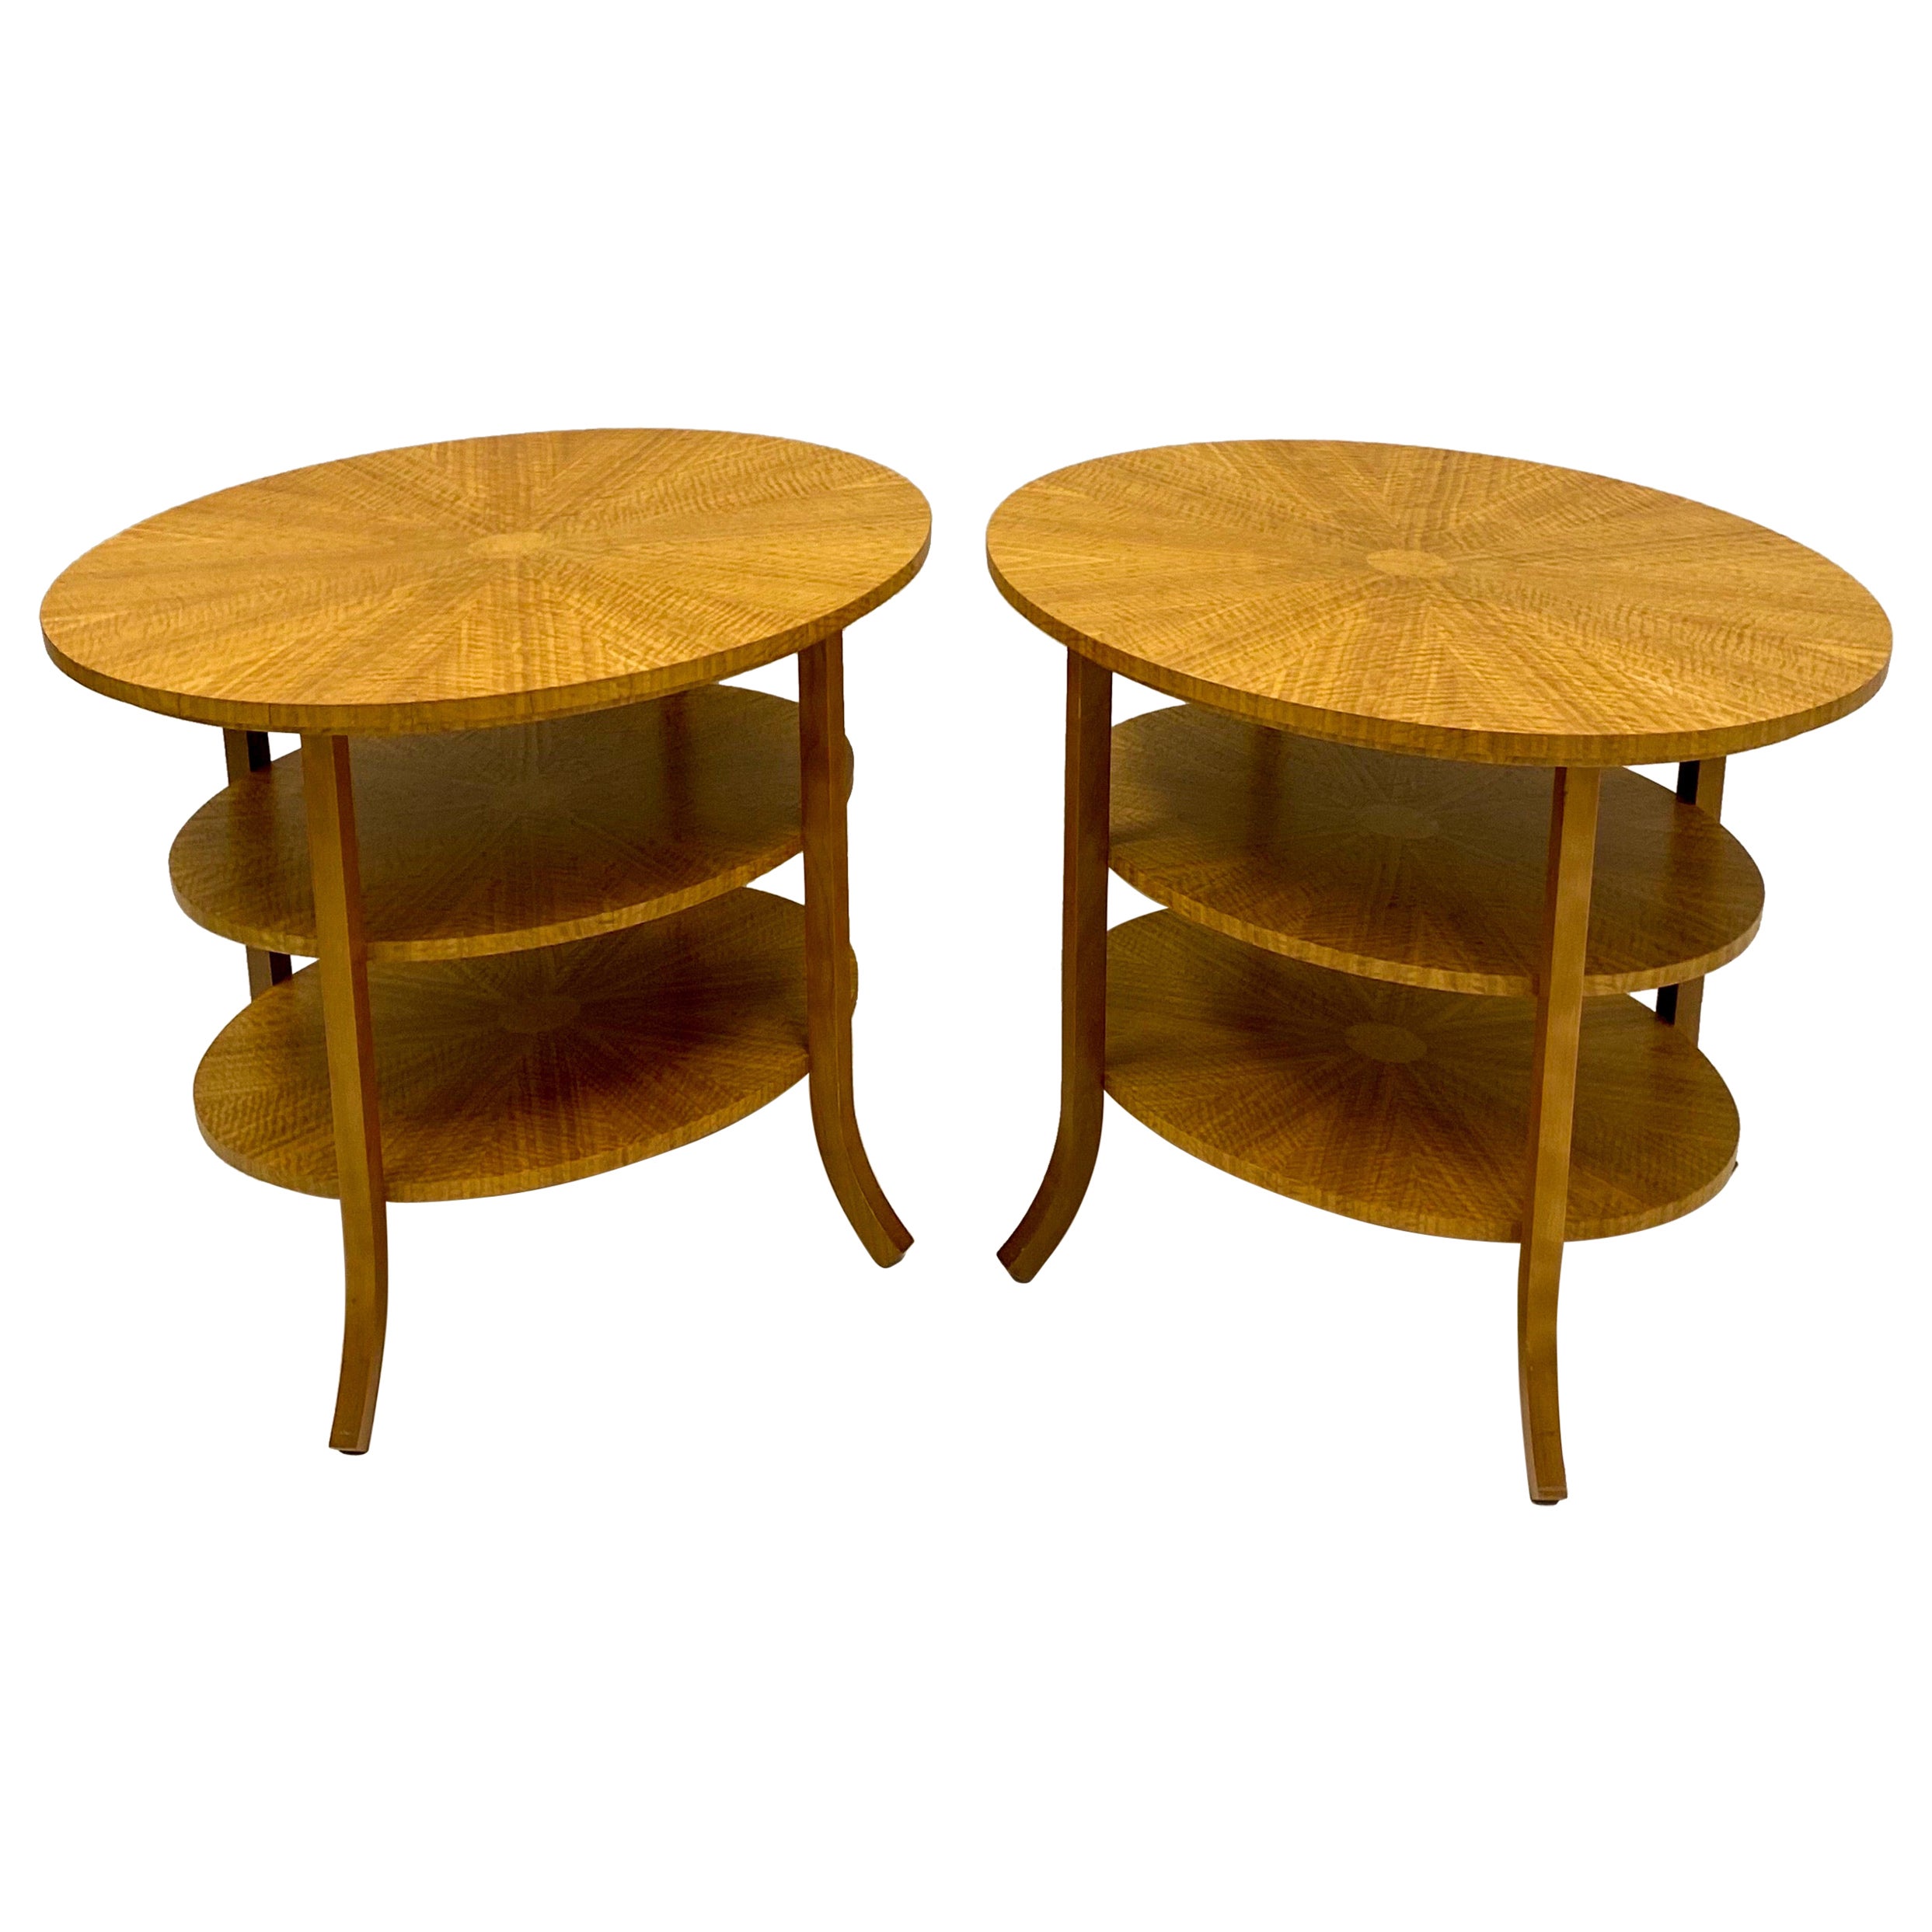 William Switzer Inlaid Biedermeier Style Modern Satinwood Side Tables, S/2